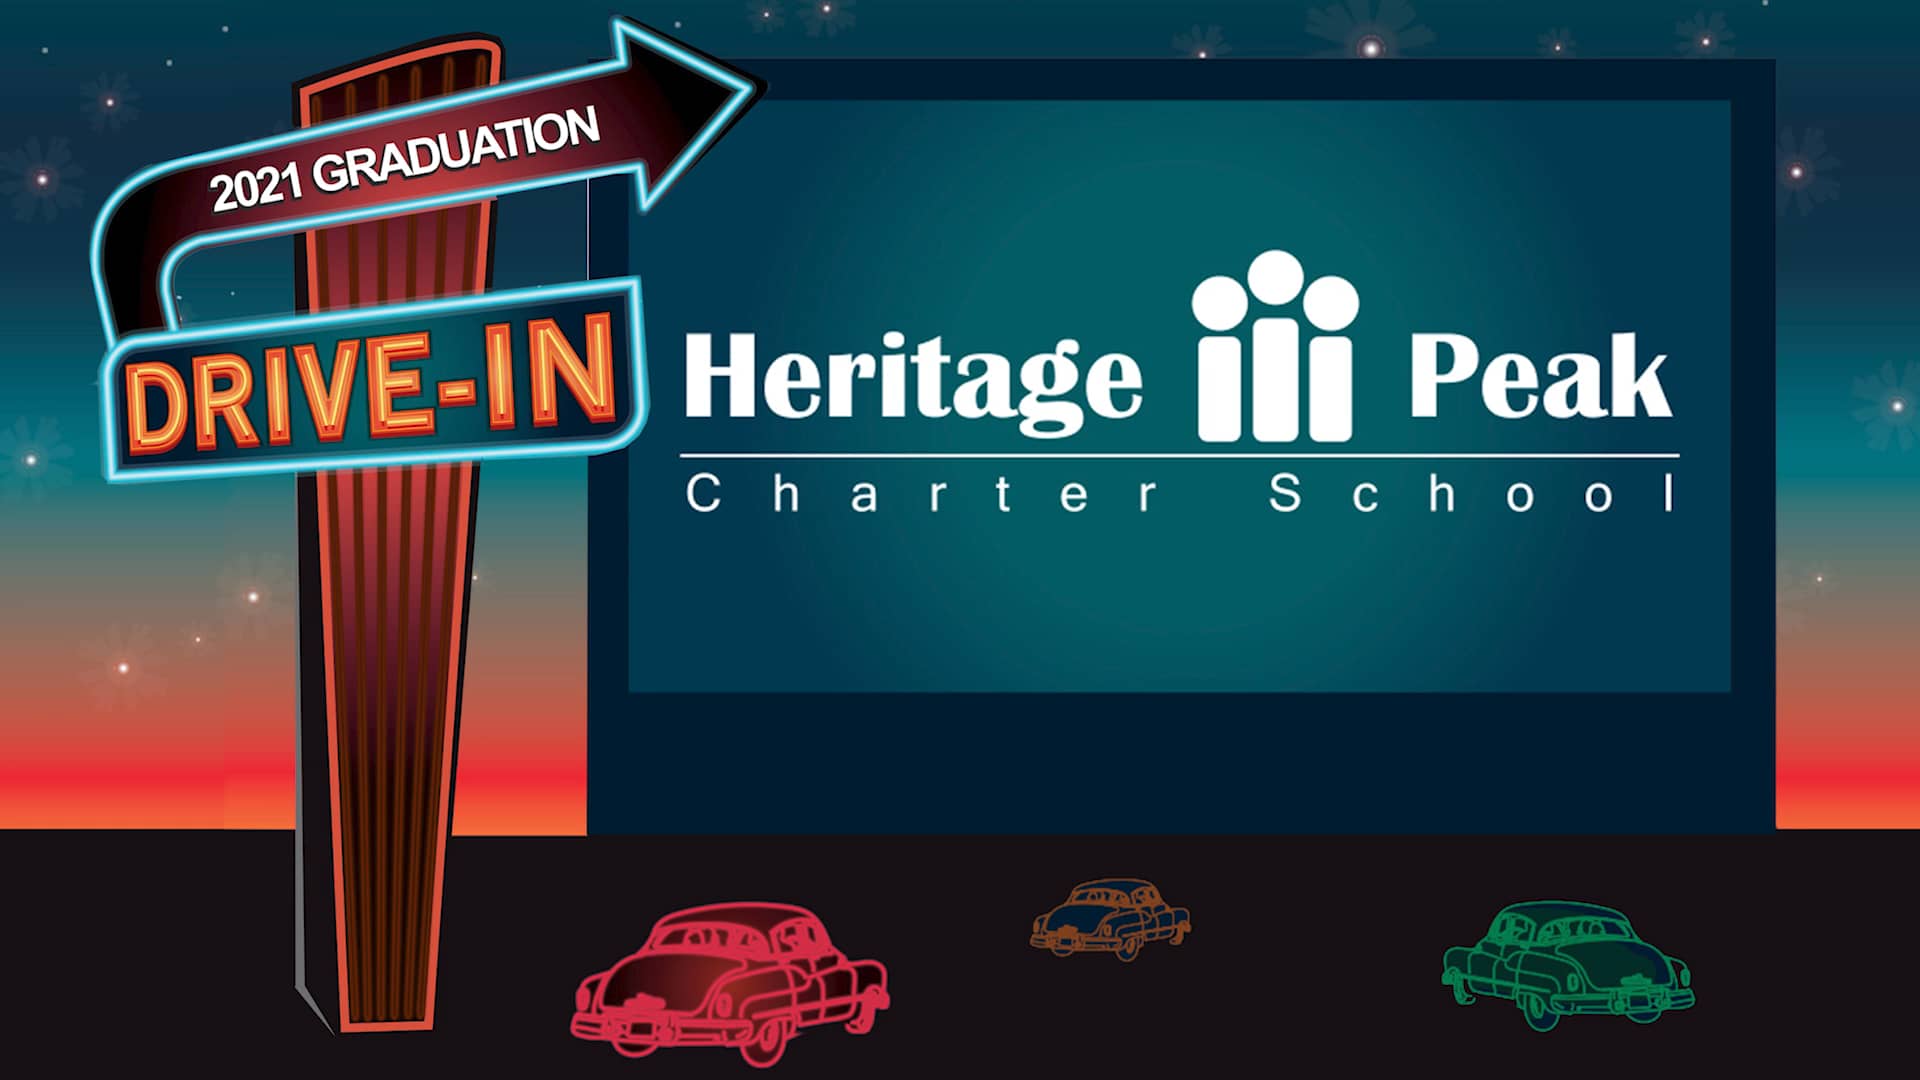 Heritage Peak Charter School Graduation Ceremony Video 2021 on Vimeo